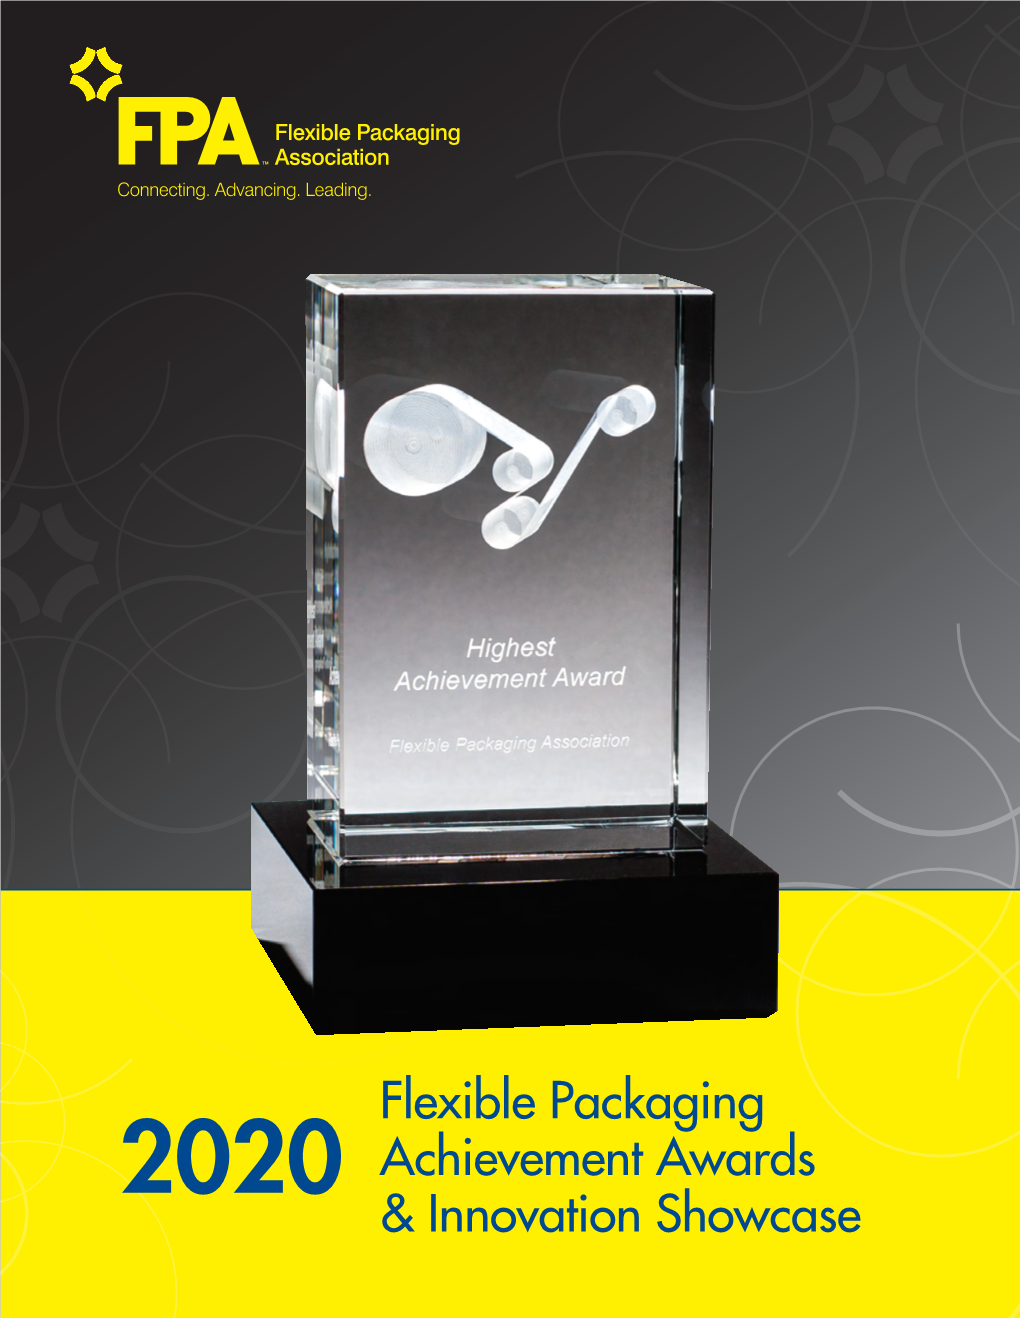 2020 Flexible Packaging Achievement Awards & Innovation Showcase